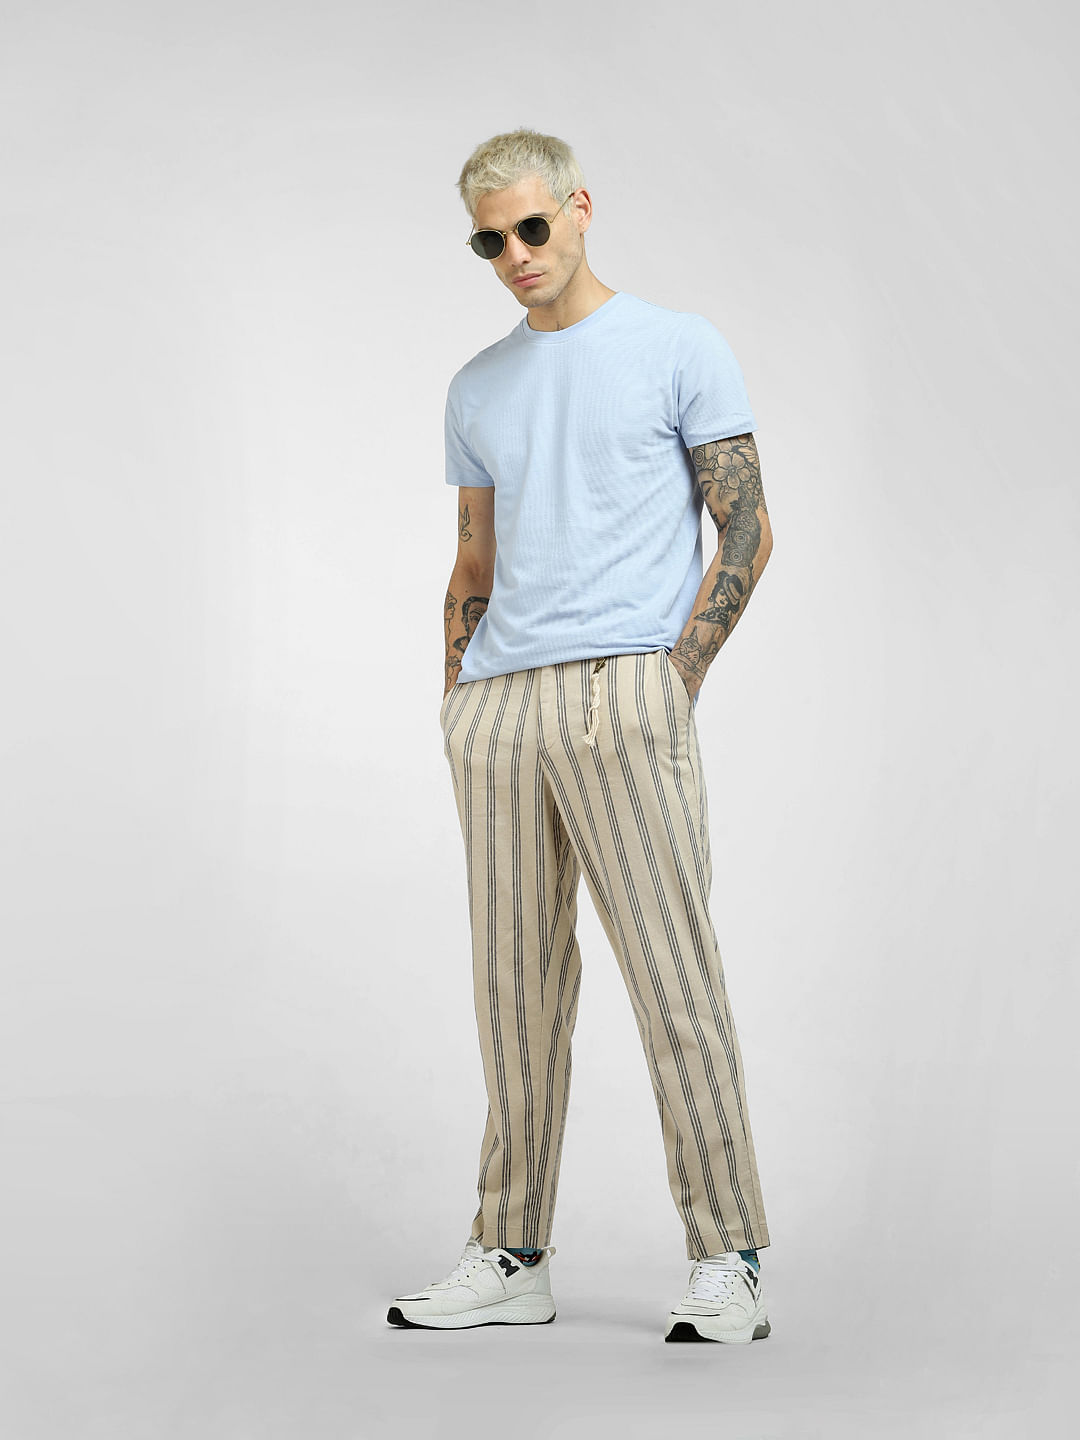 Buy Men's Grey Striped Trousers Online at Bewakoof